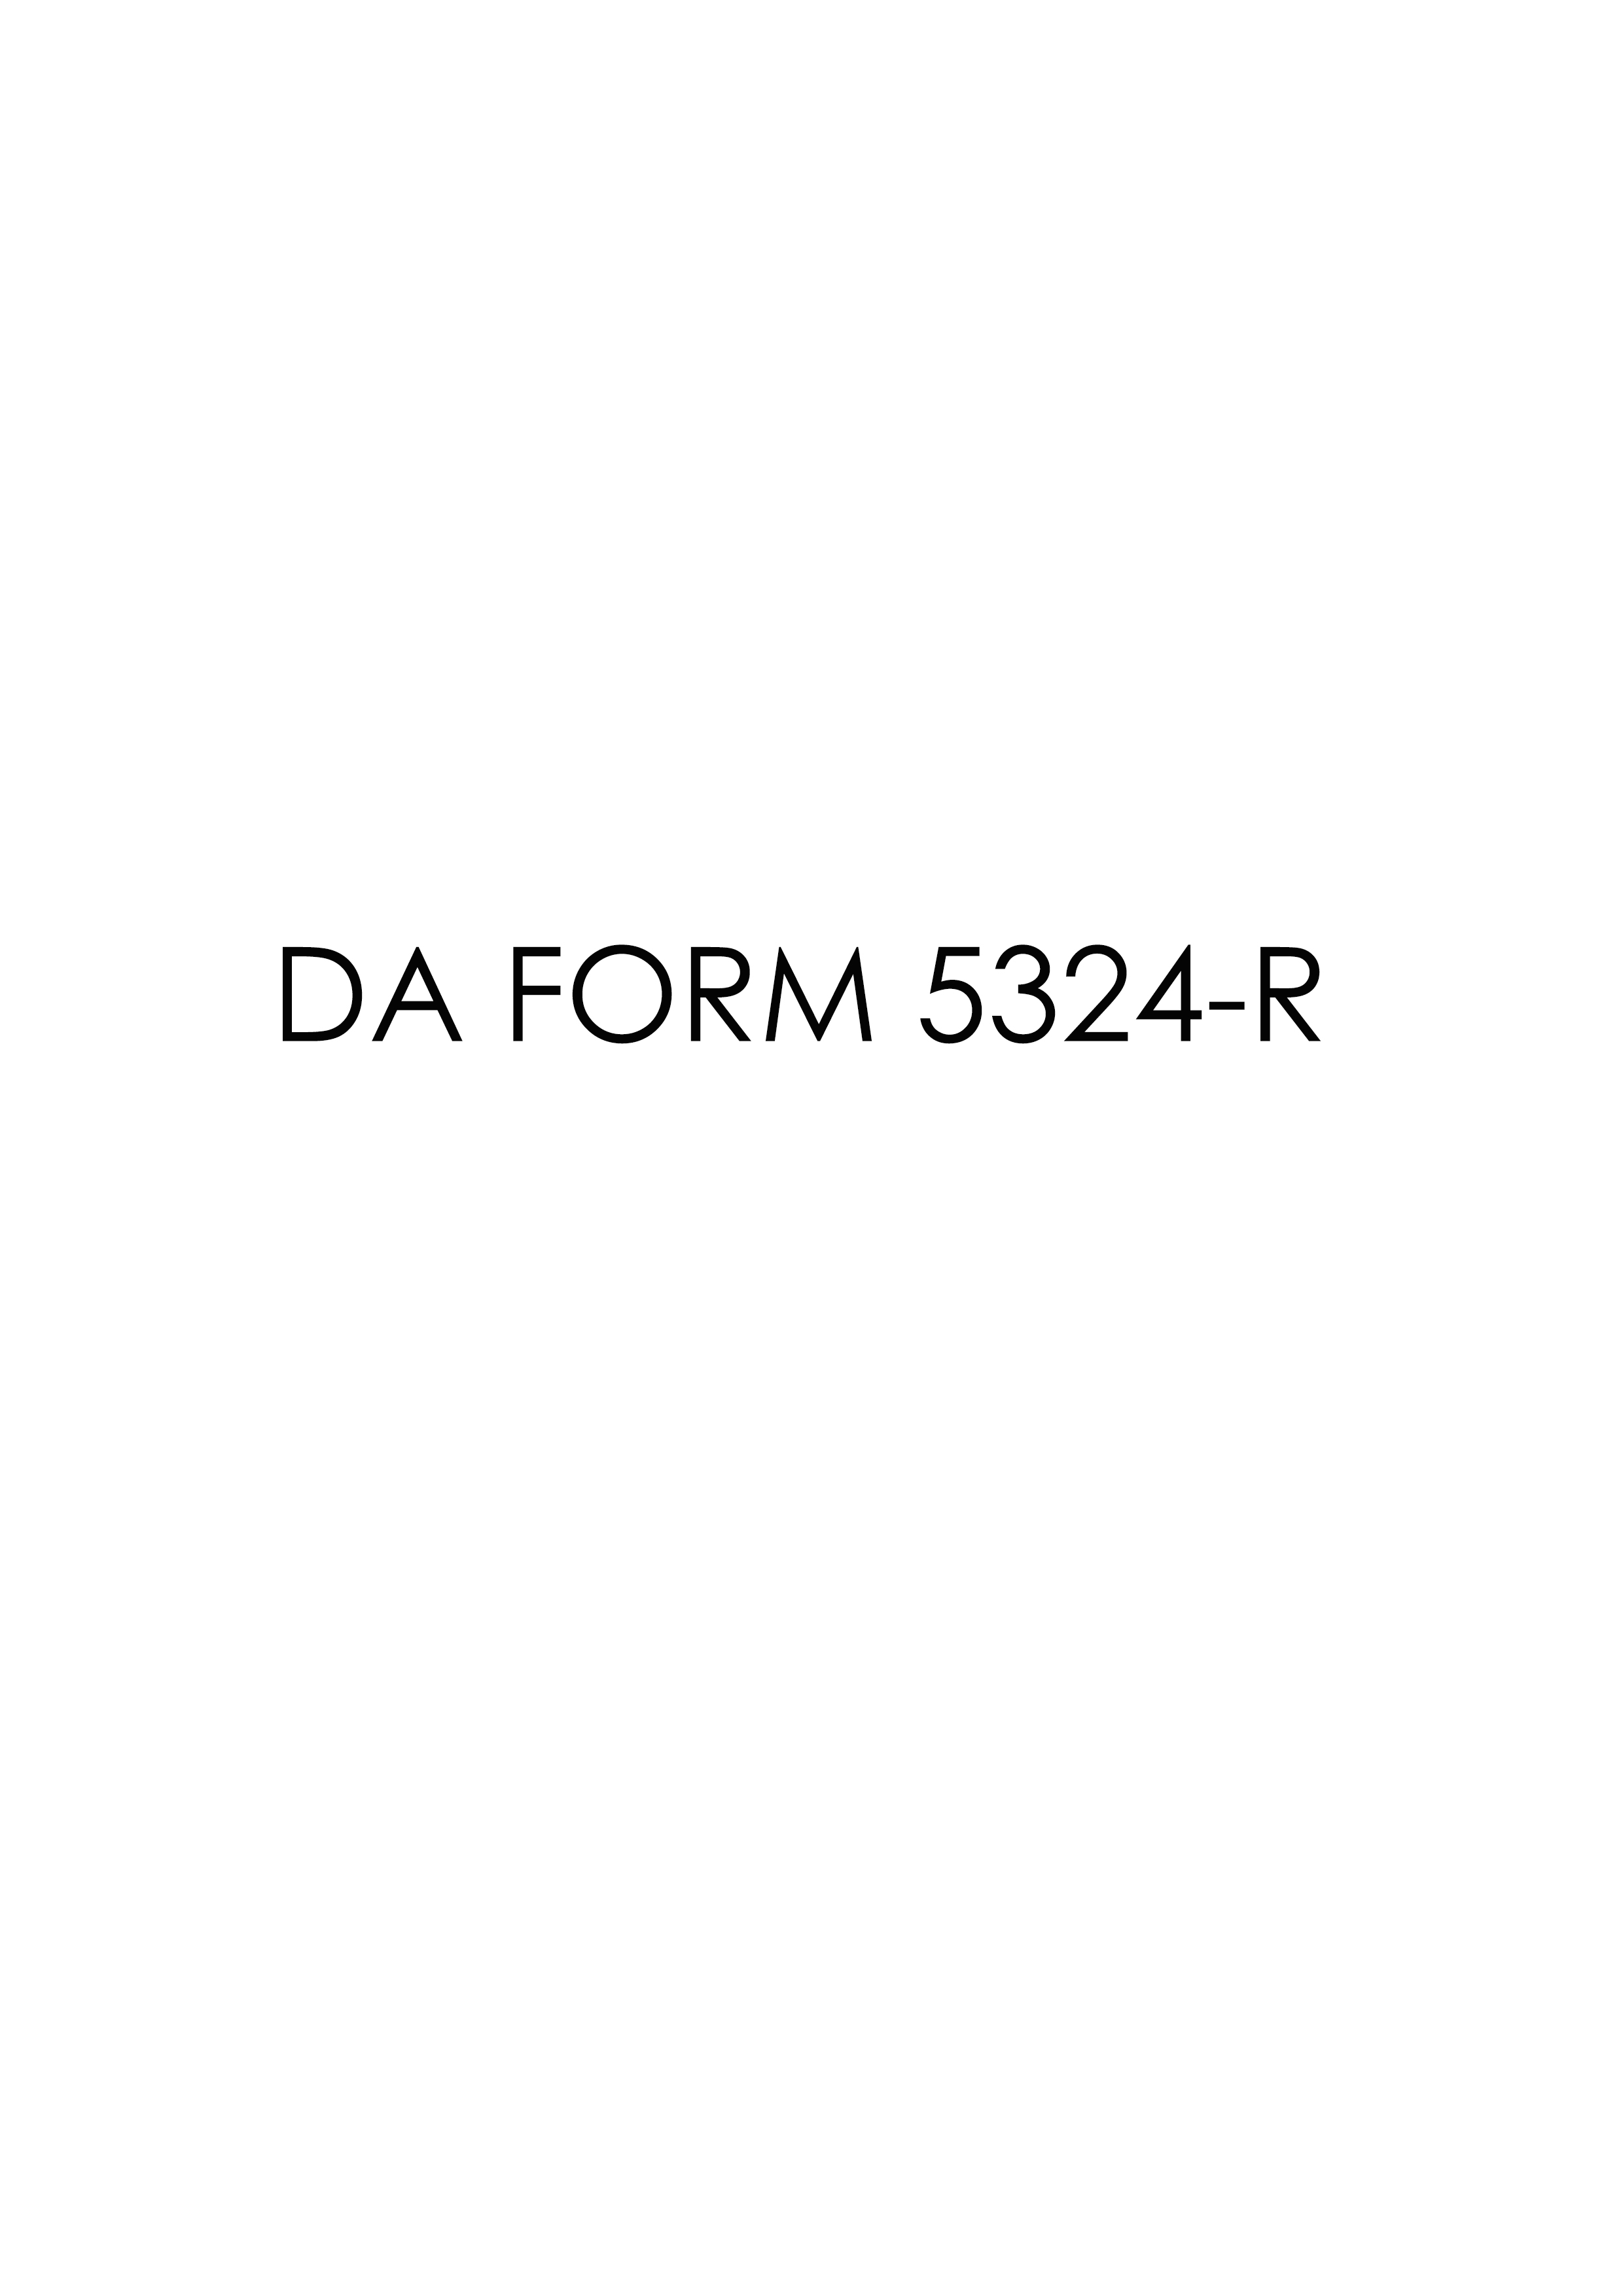 da Form 5324-R fillable